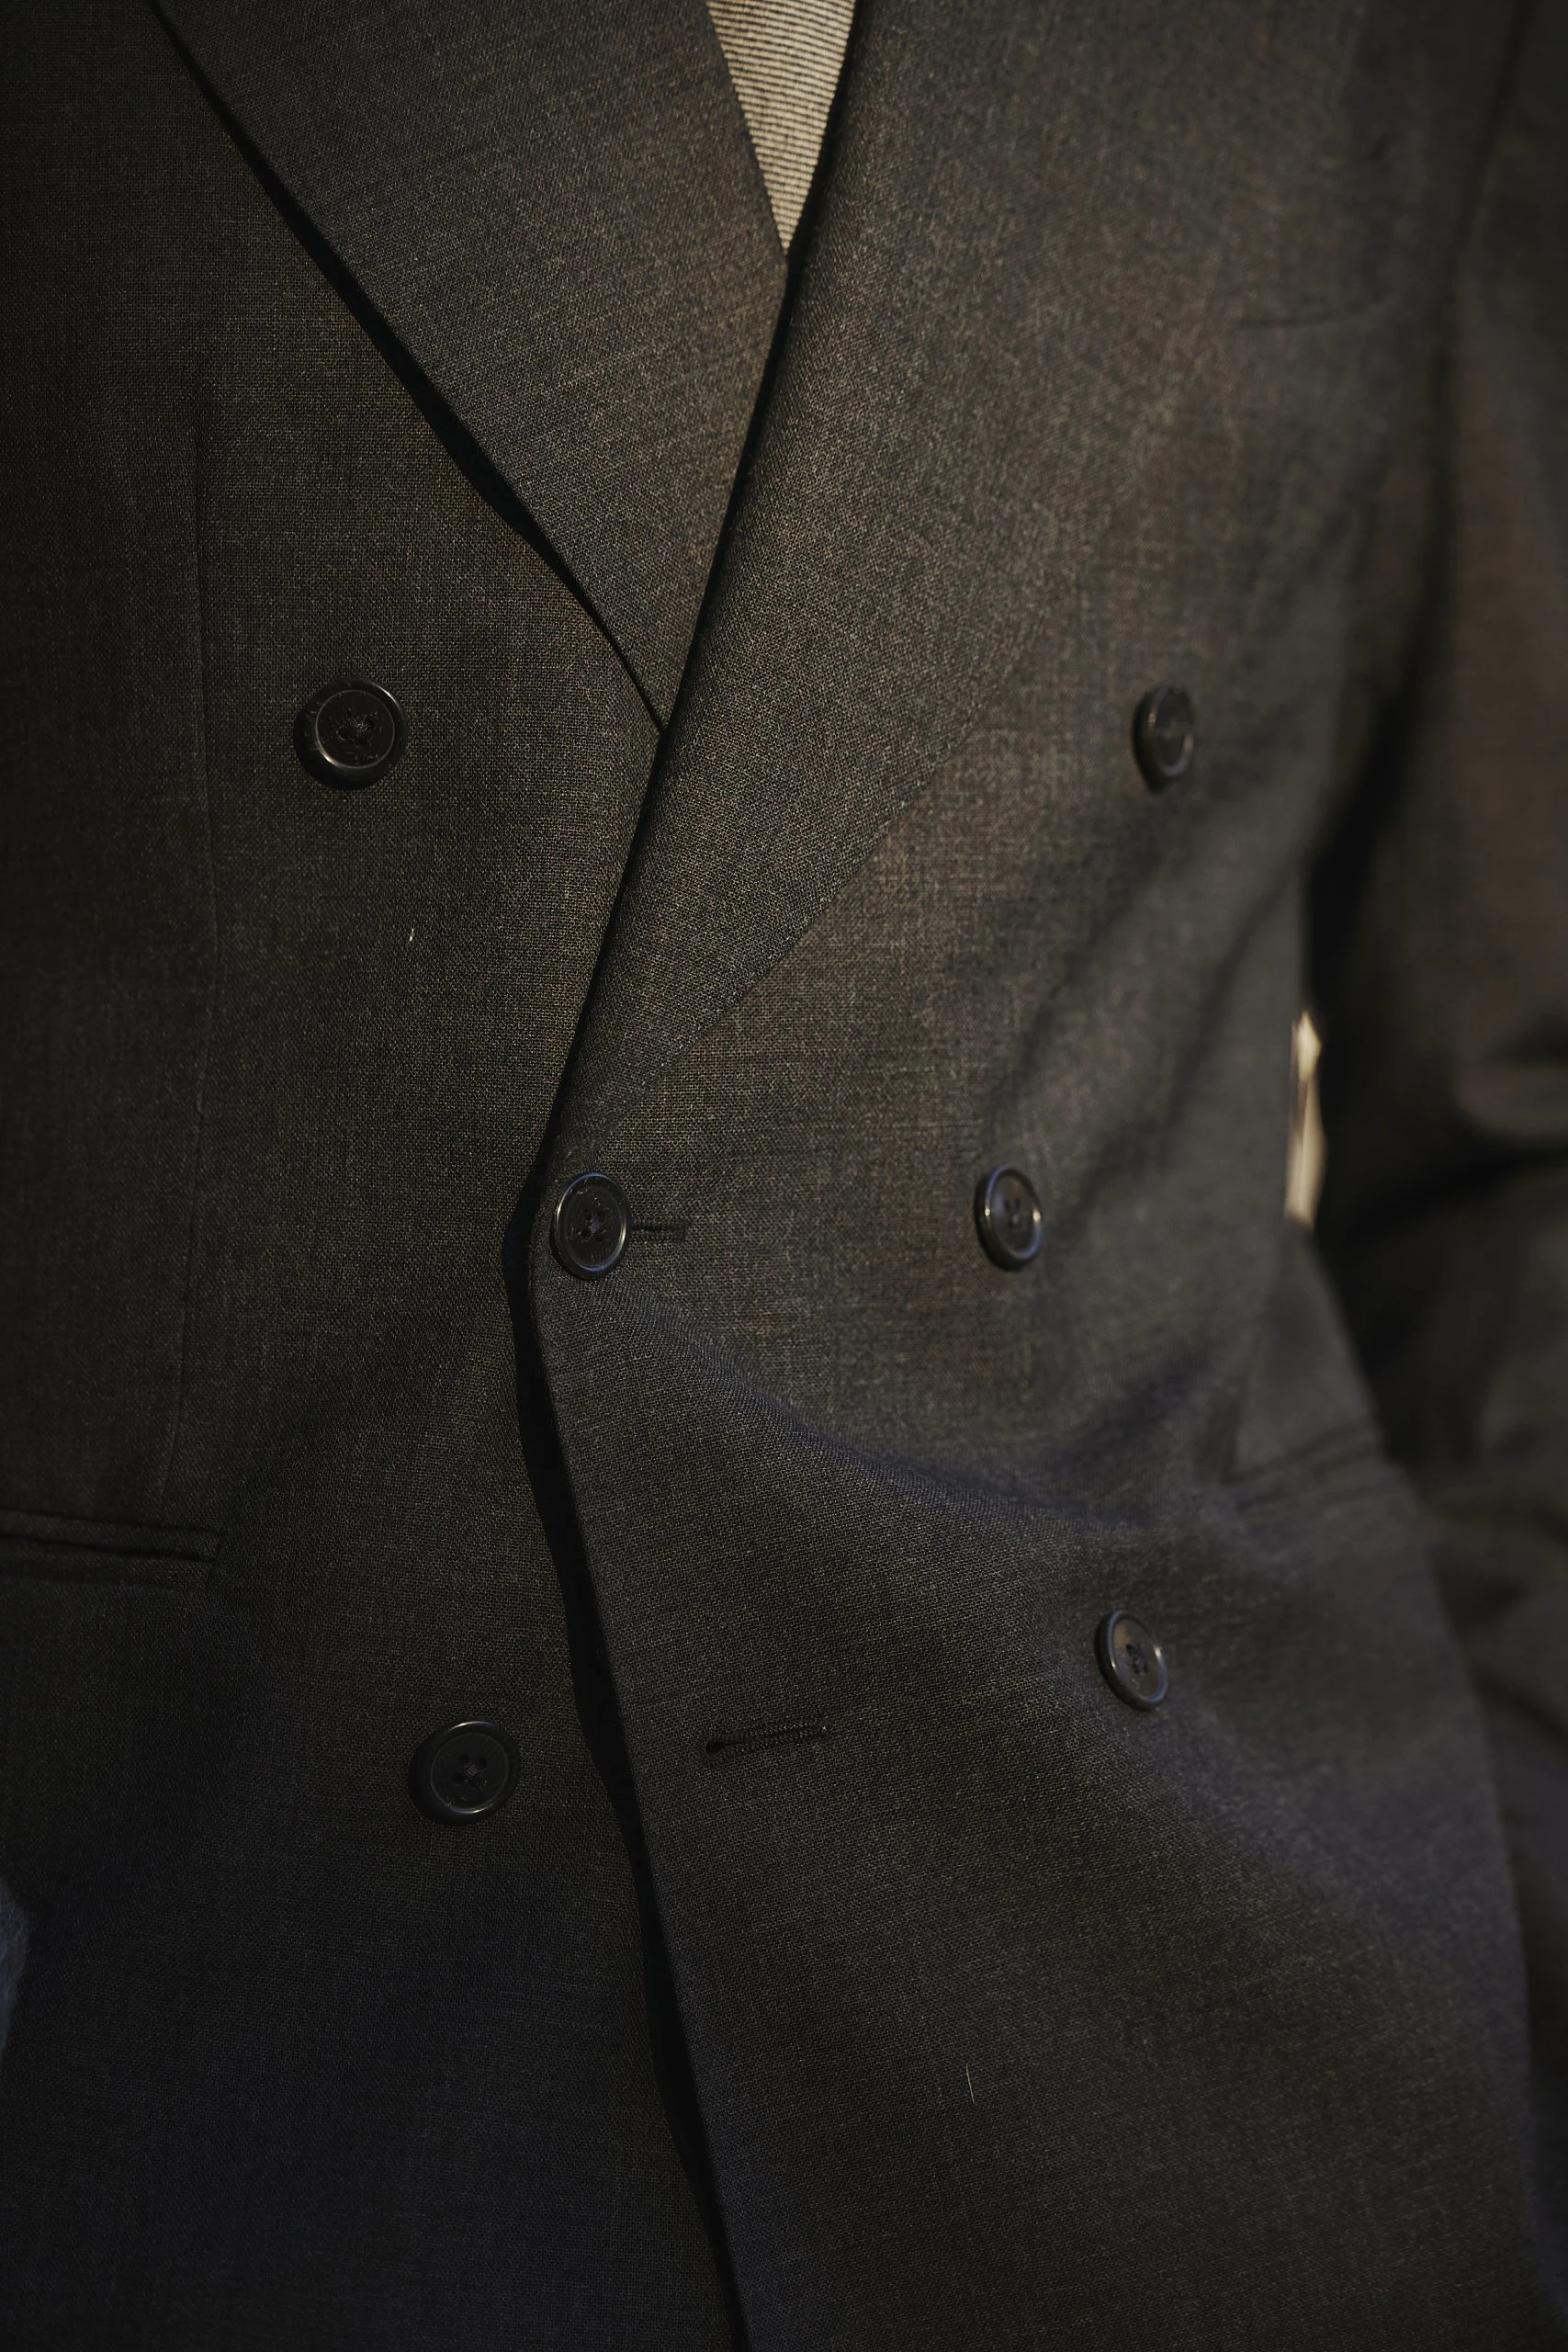 Carlos Domord in a dark grey Twistair suit by mond of copenhagen